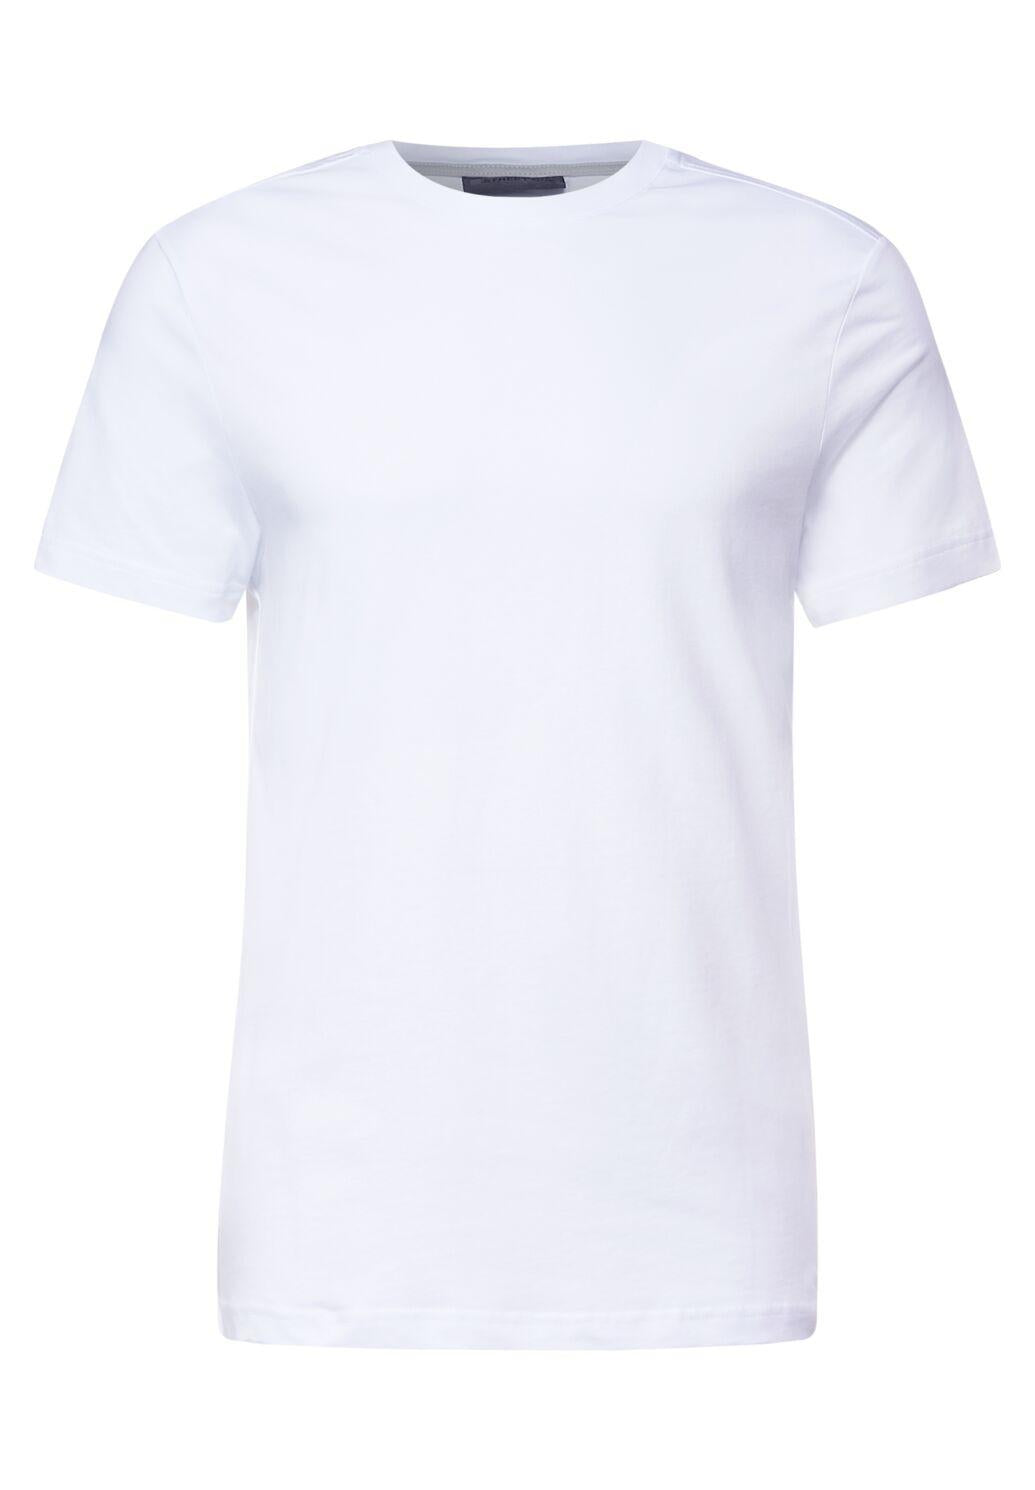 Herren Basic T-Shirt in Unifarbe weiß D317728-10000